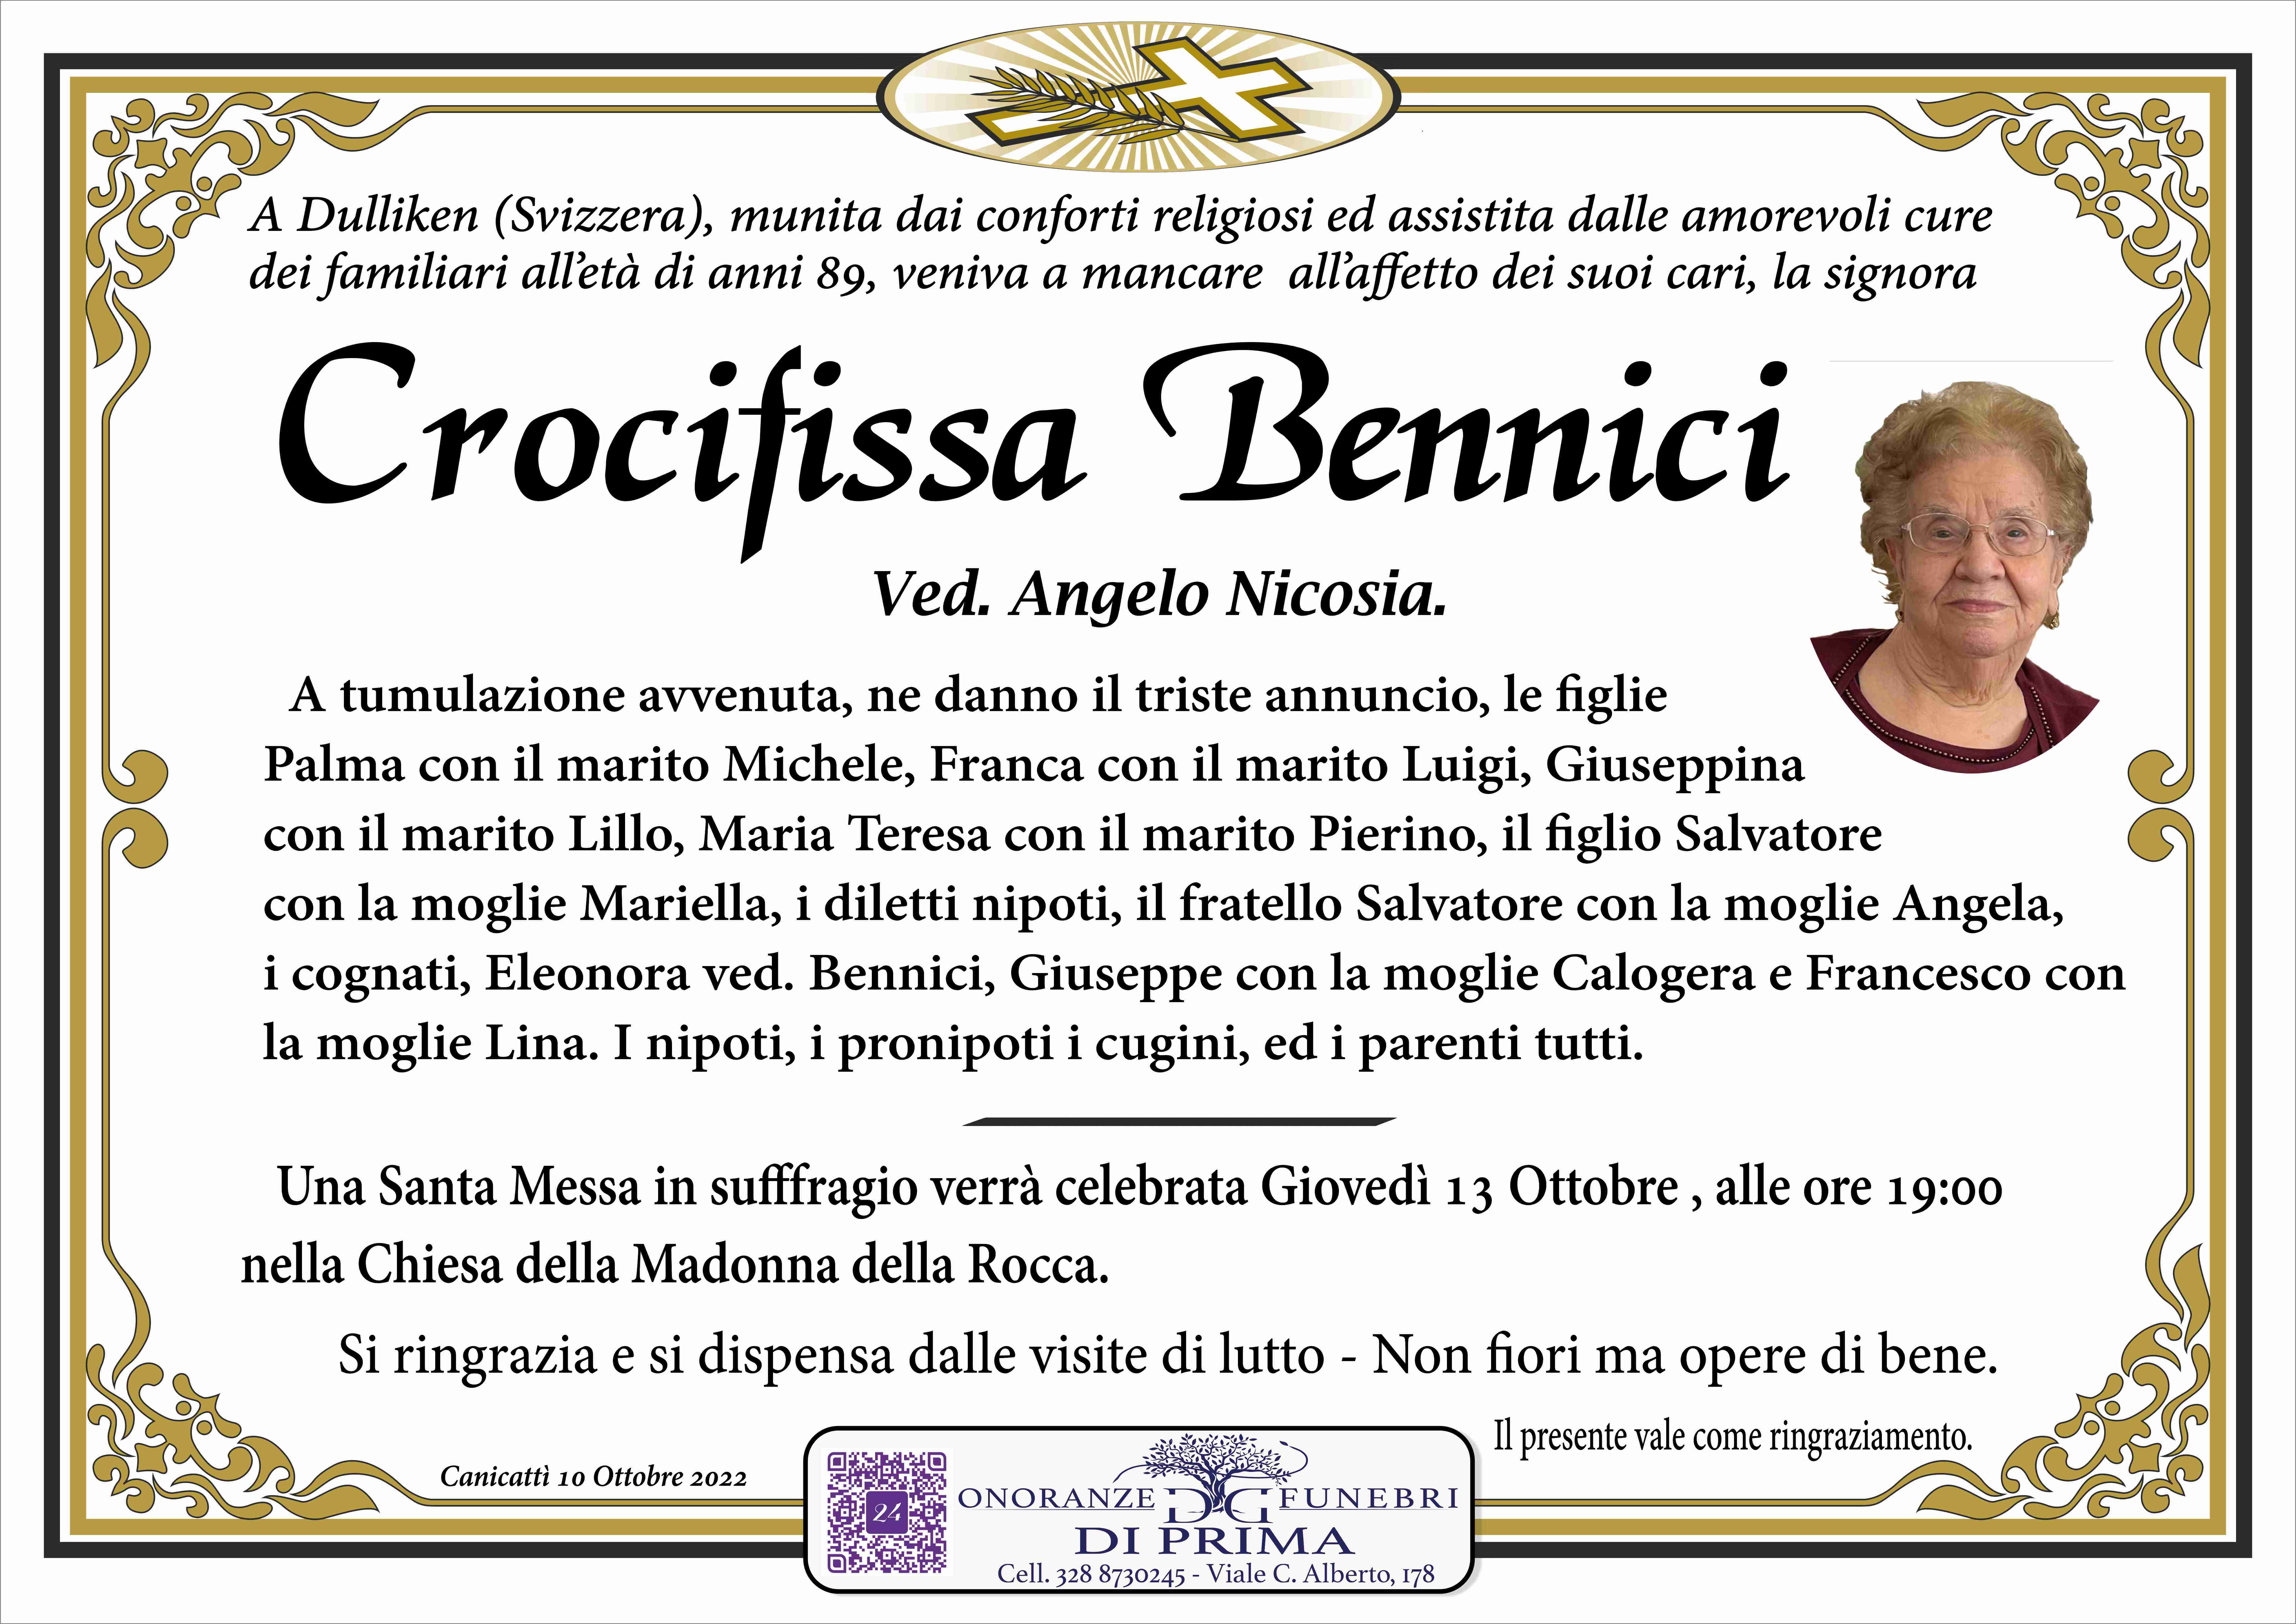 Crocifissa Bennici